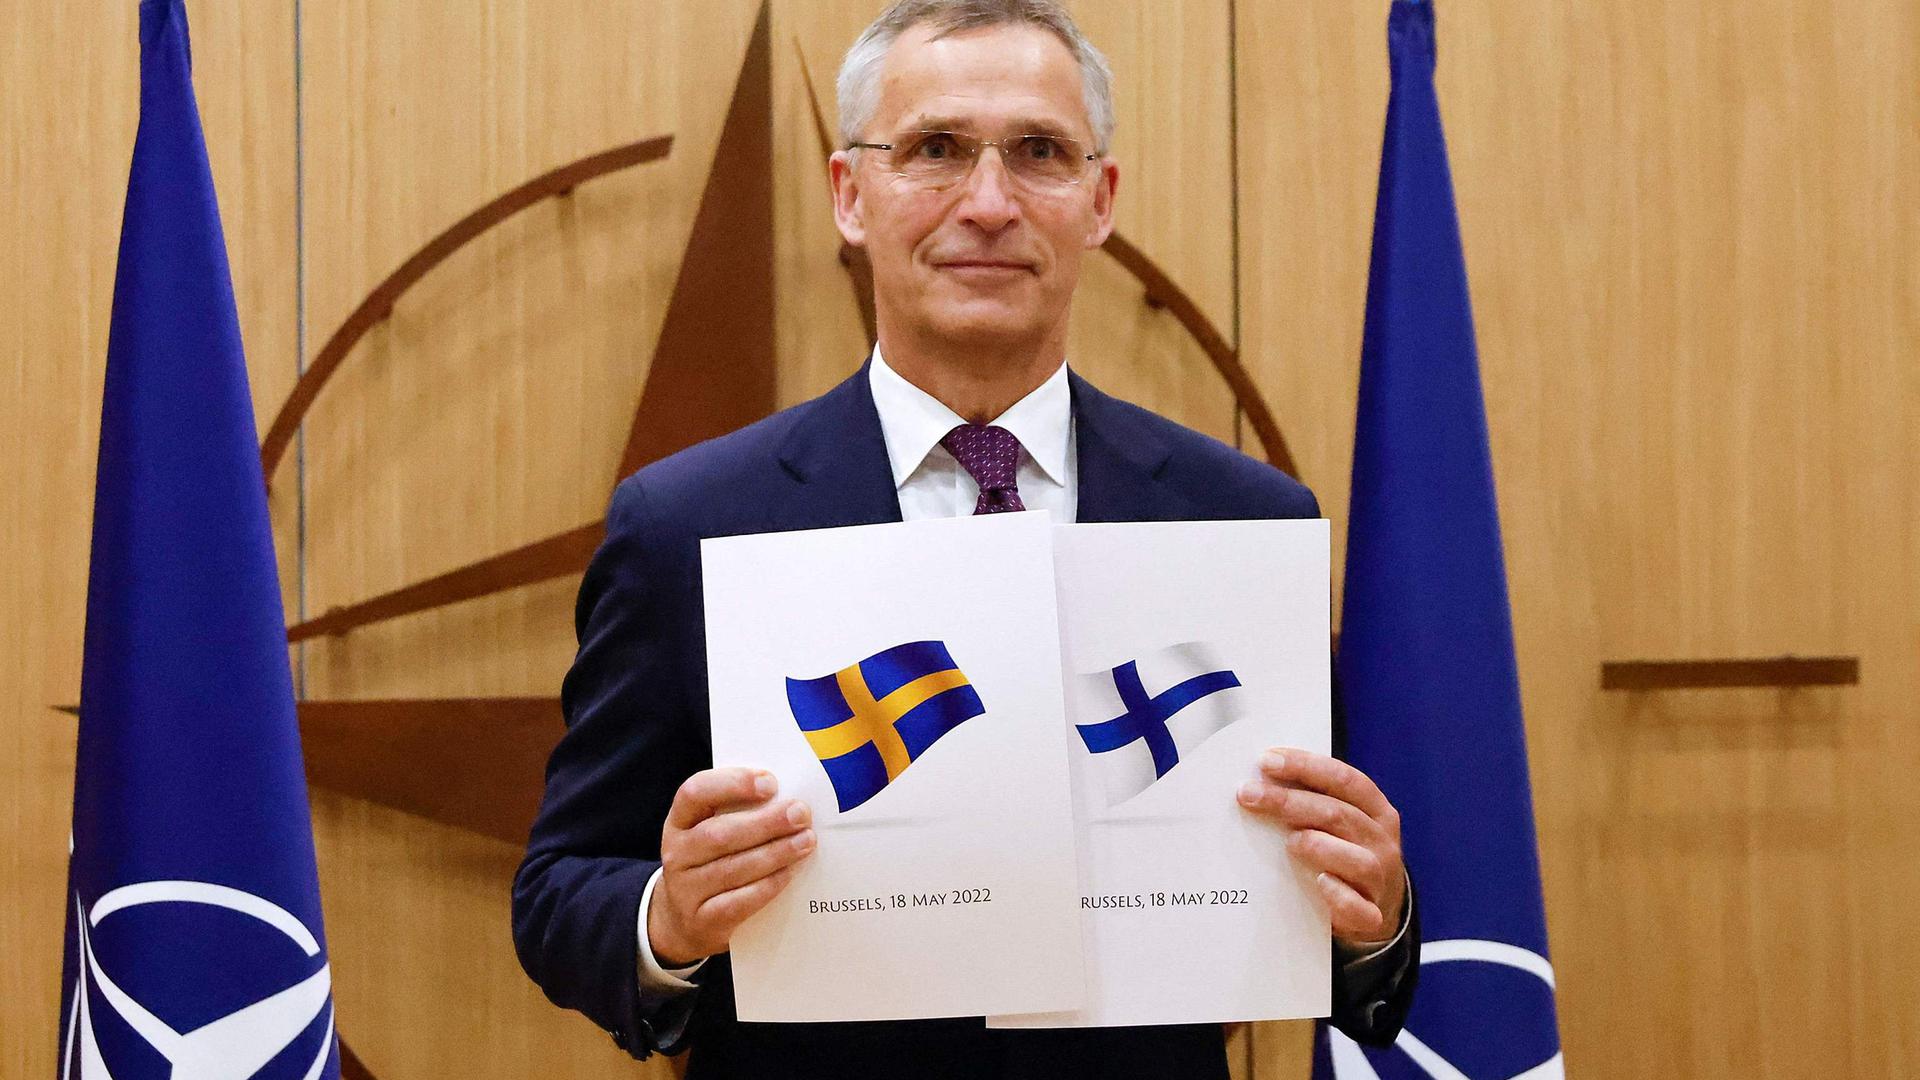 Nato secretary-general Jens Stoltenberg hailed the ‘historic moment’ of Sweden and Finland applying for membership to the transatlantic alliance